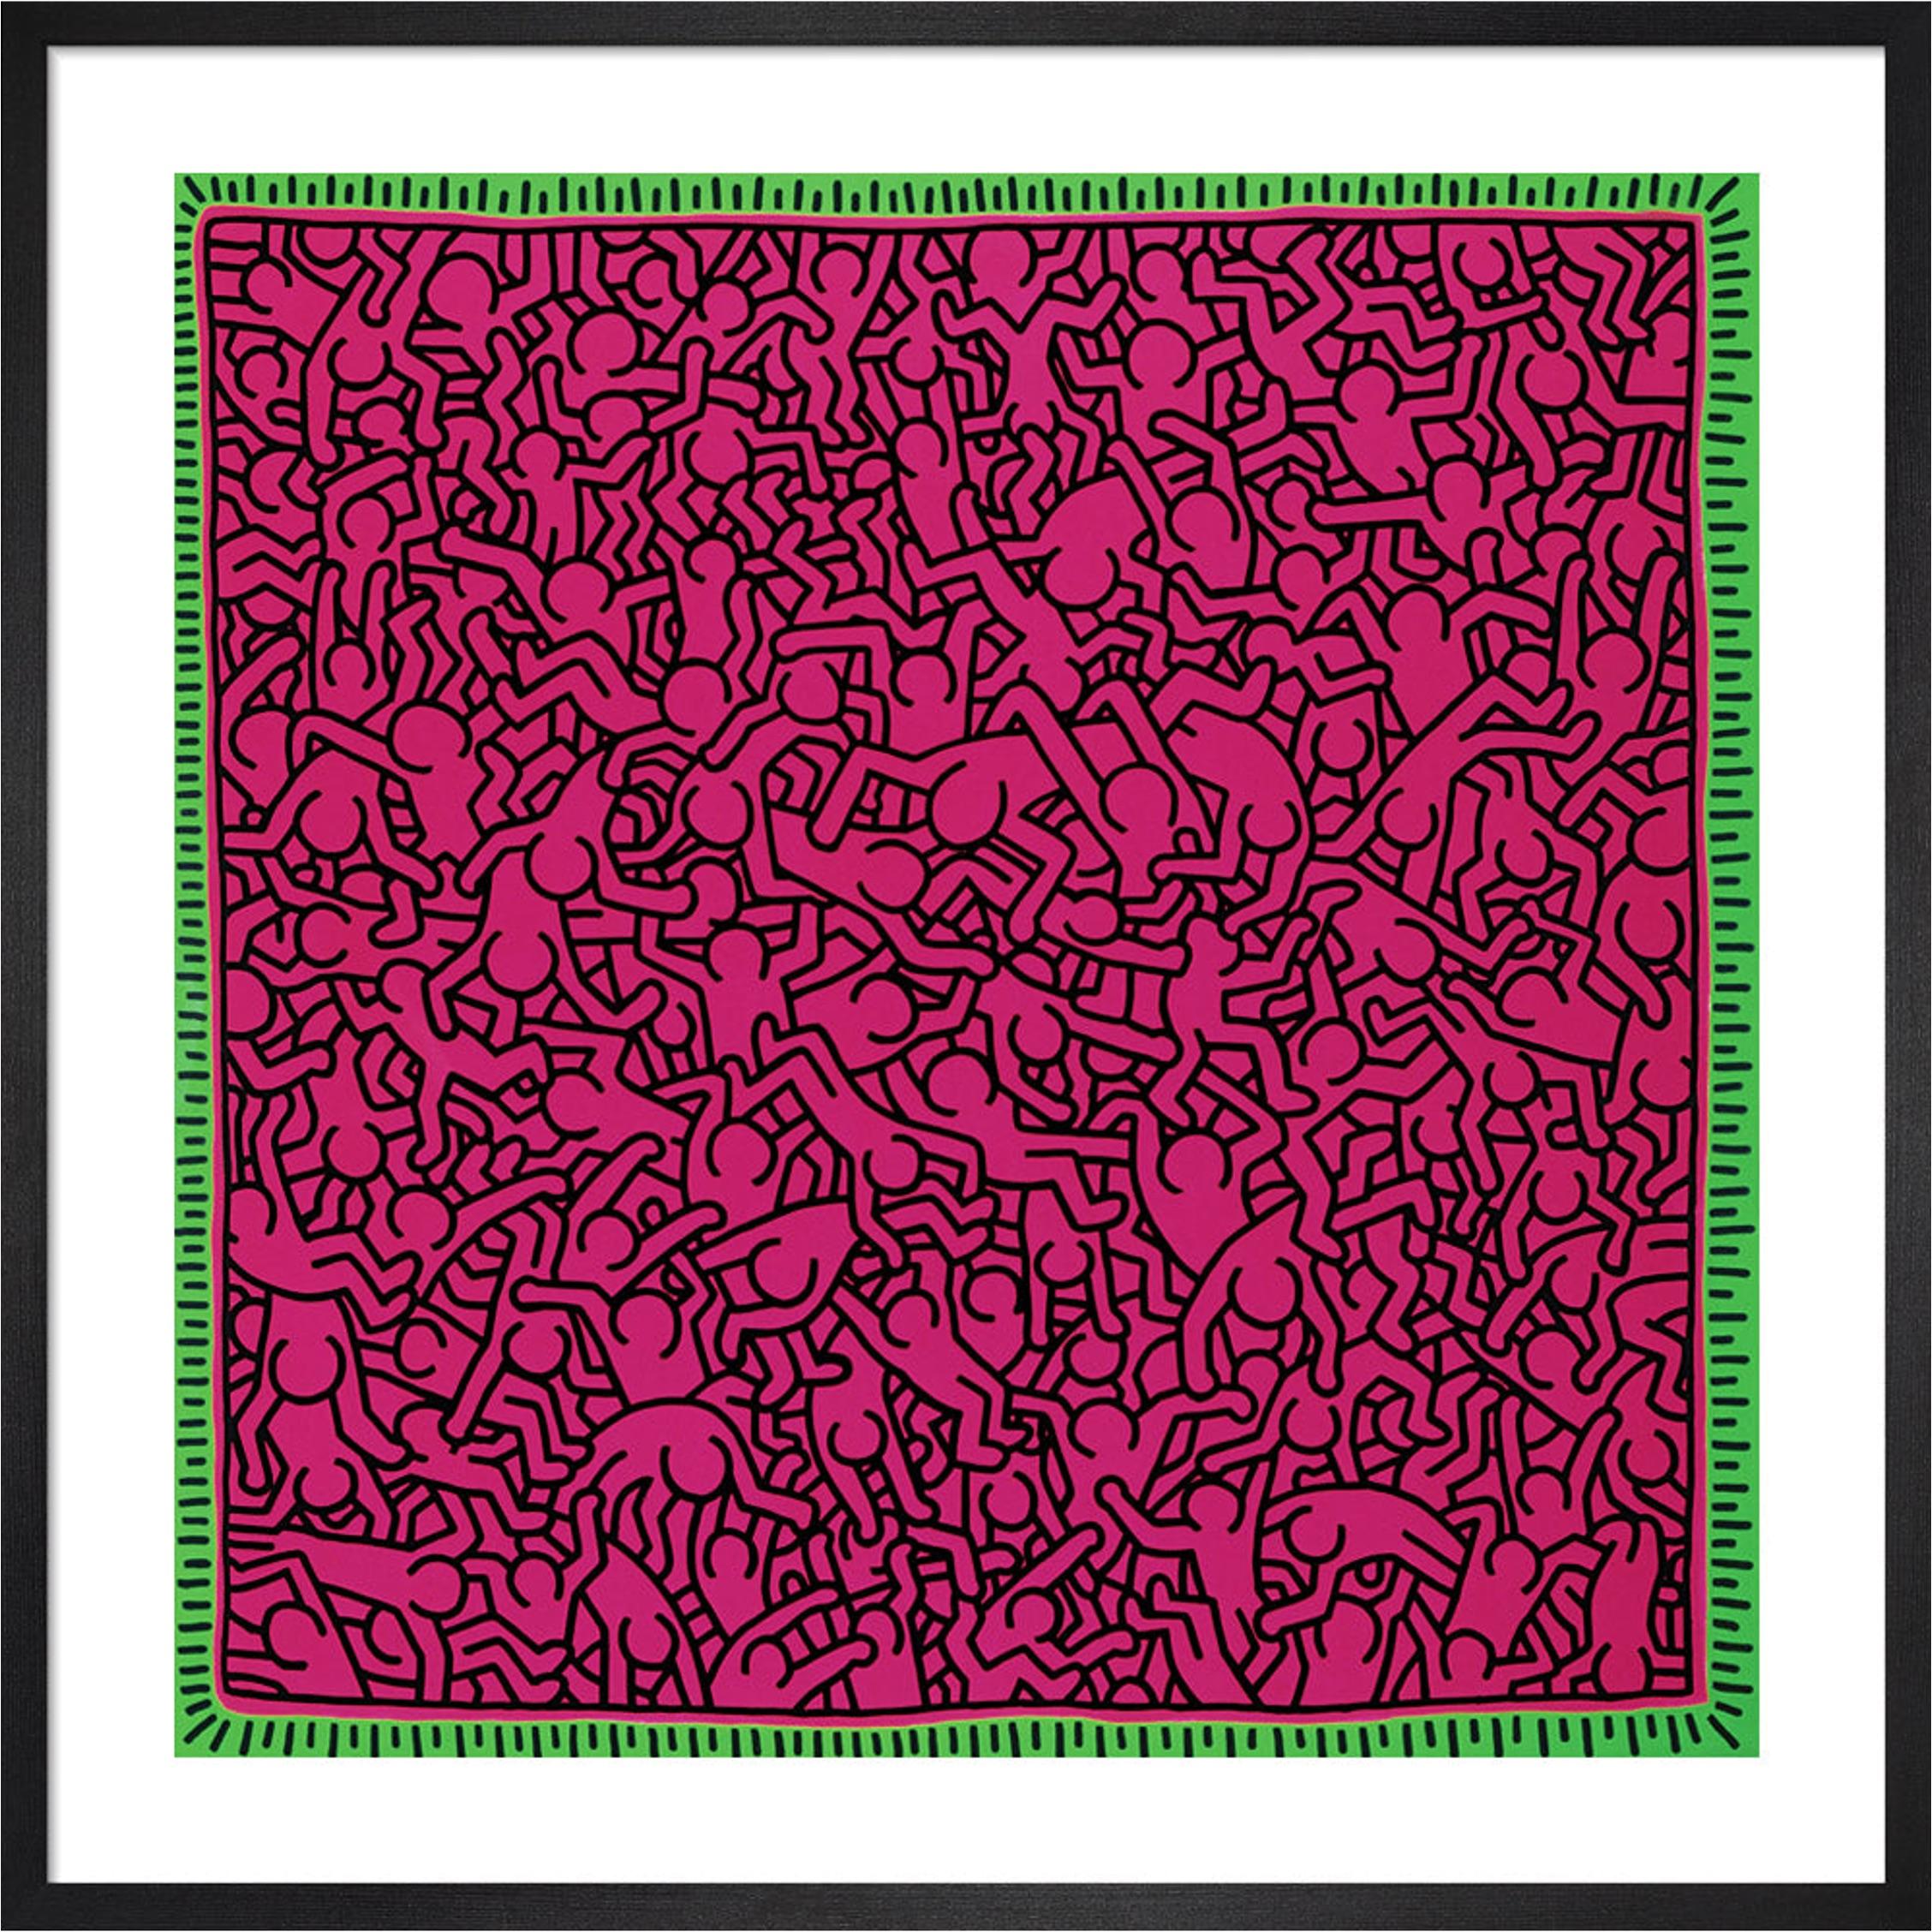 Keith Haring - Untitled Impression encadrée